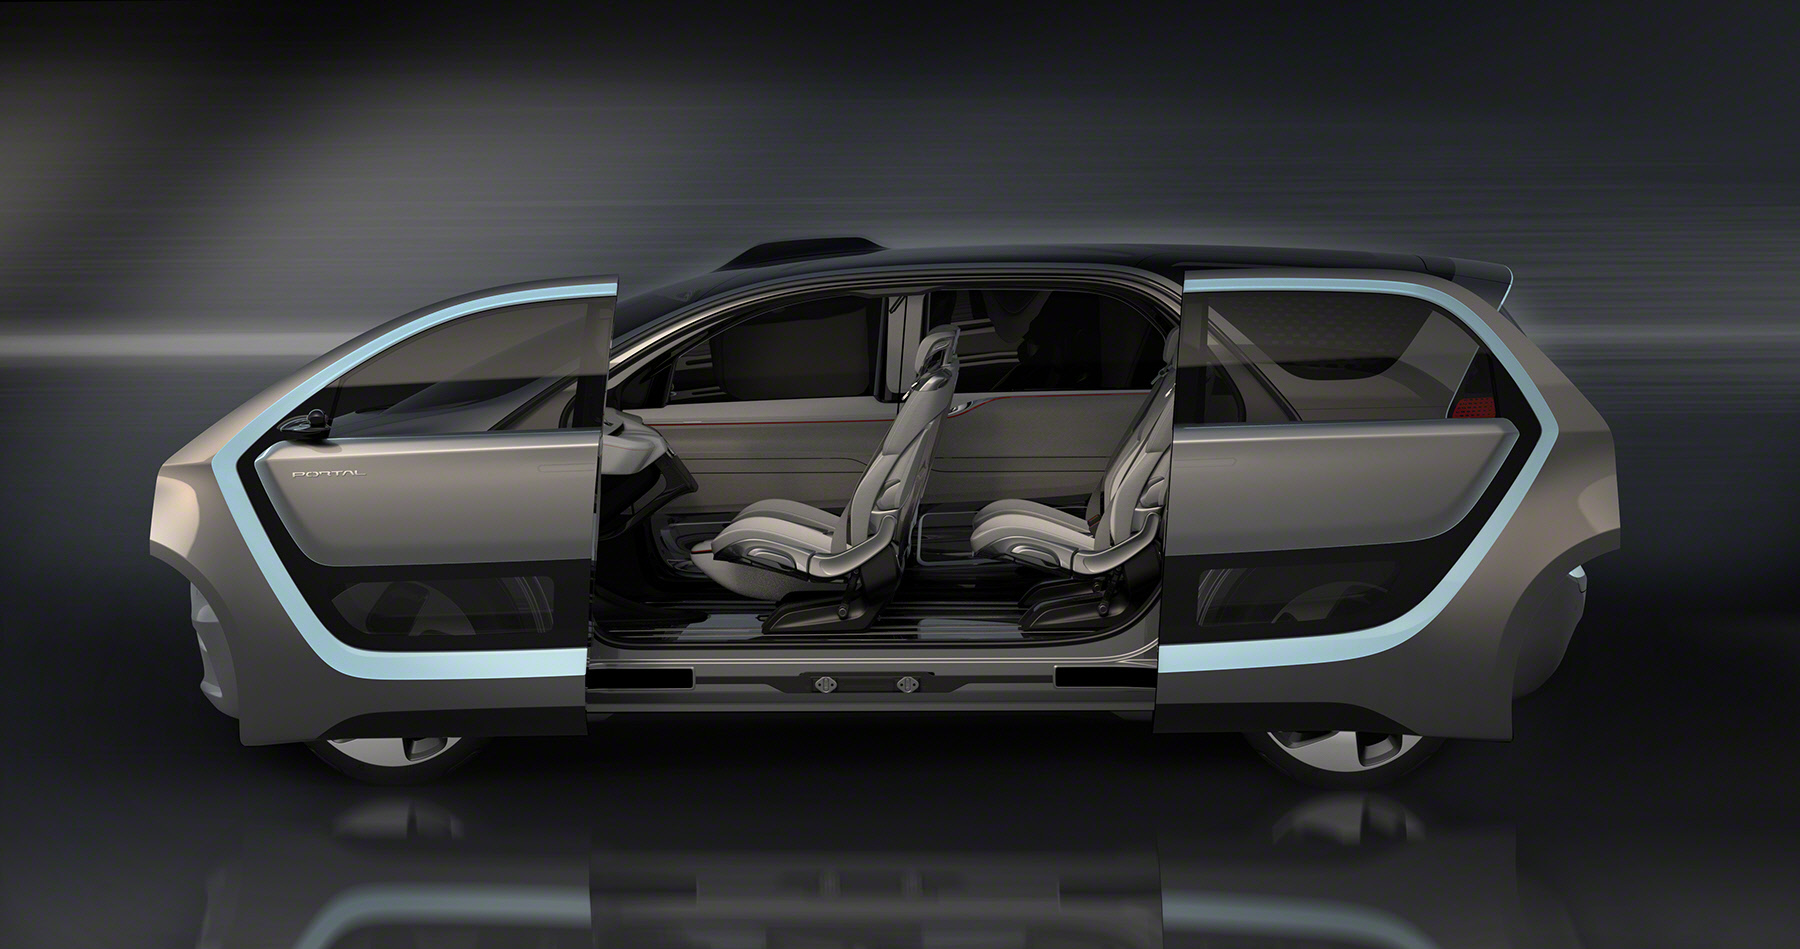 Chrysler Portal All Electric Autonomous Concept door opening at CES 2017